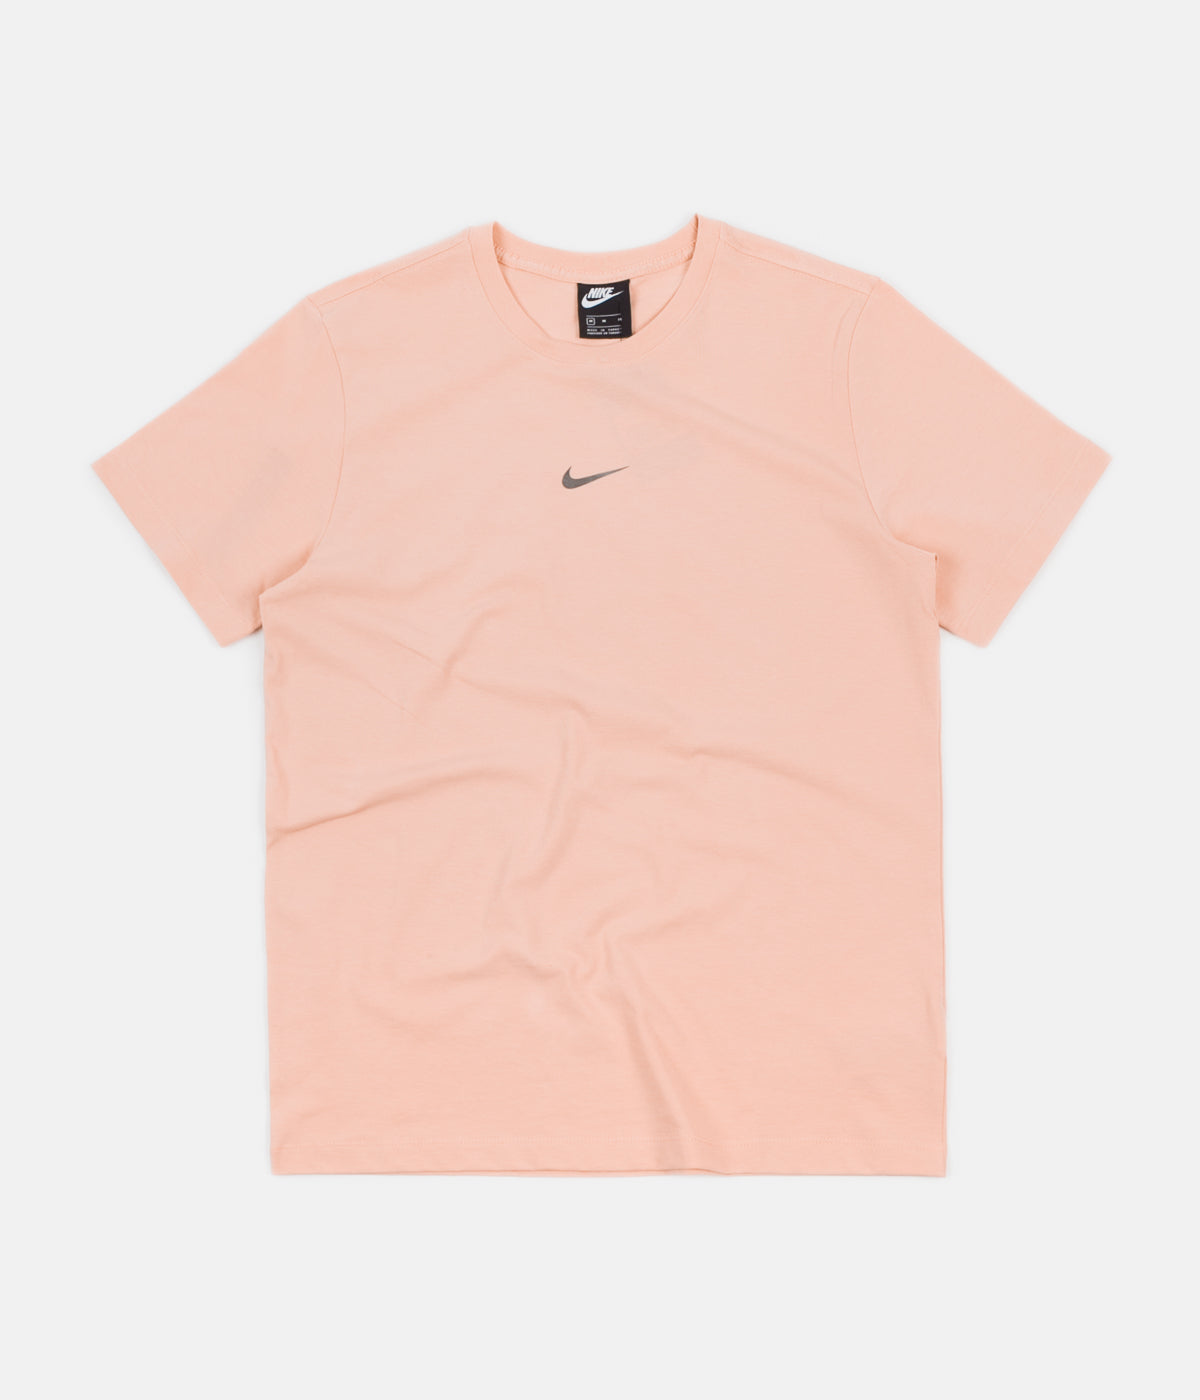 pink quartz nike shirt